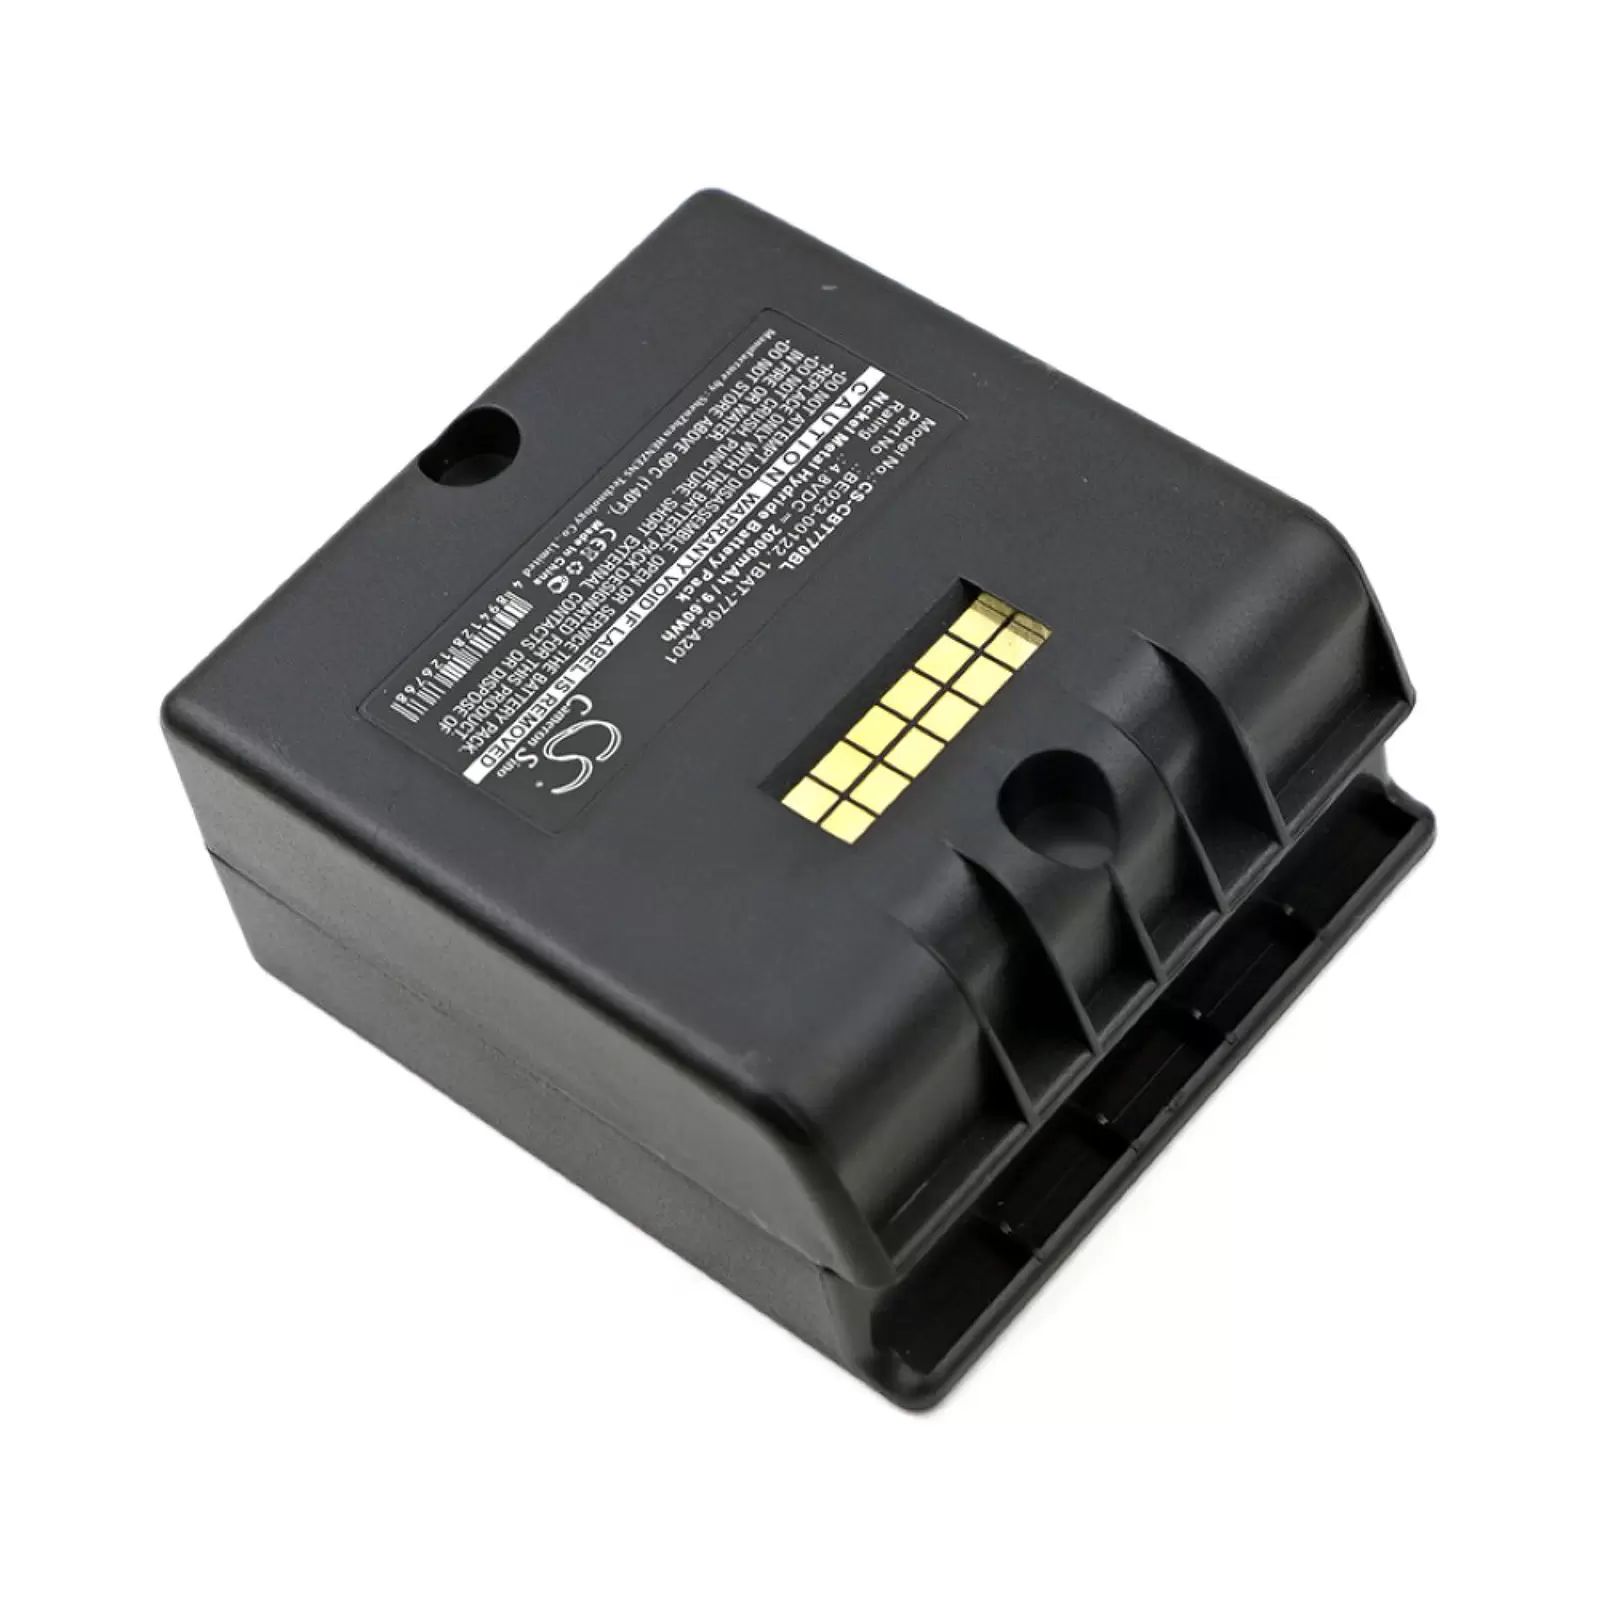 Powerakku für Kran-Funkfernsteuerung Cattron Theimeg LRC / LRC-L / Typ BE023-00122 - 4,8V - 2500 mAh